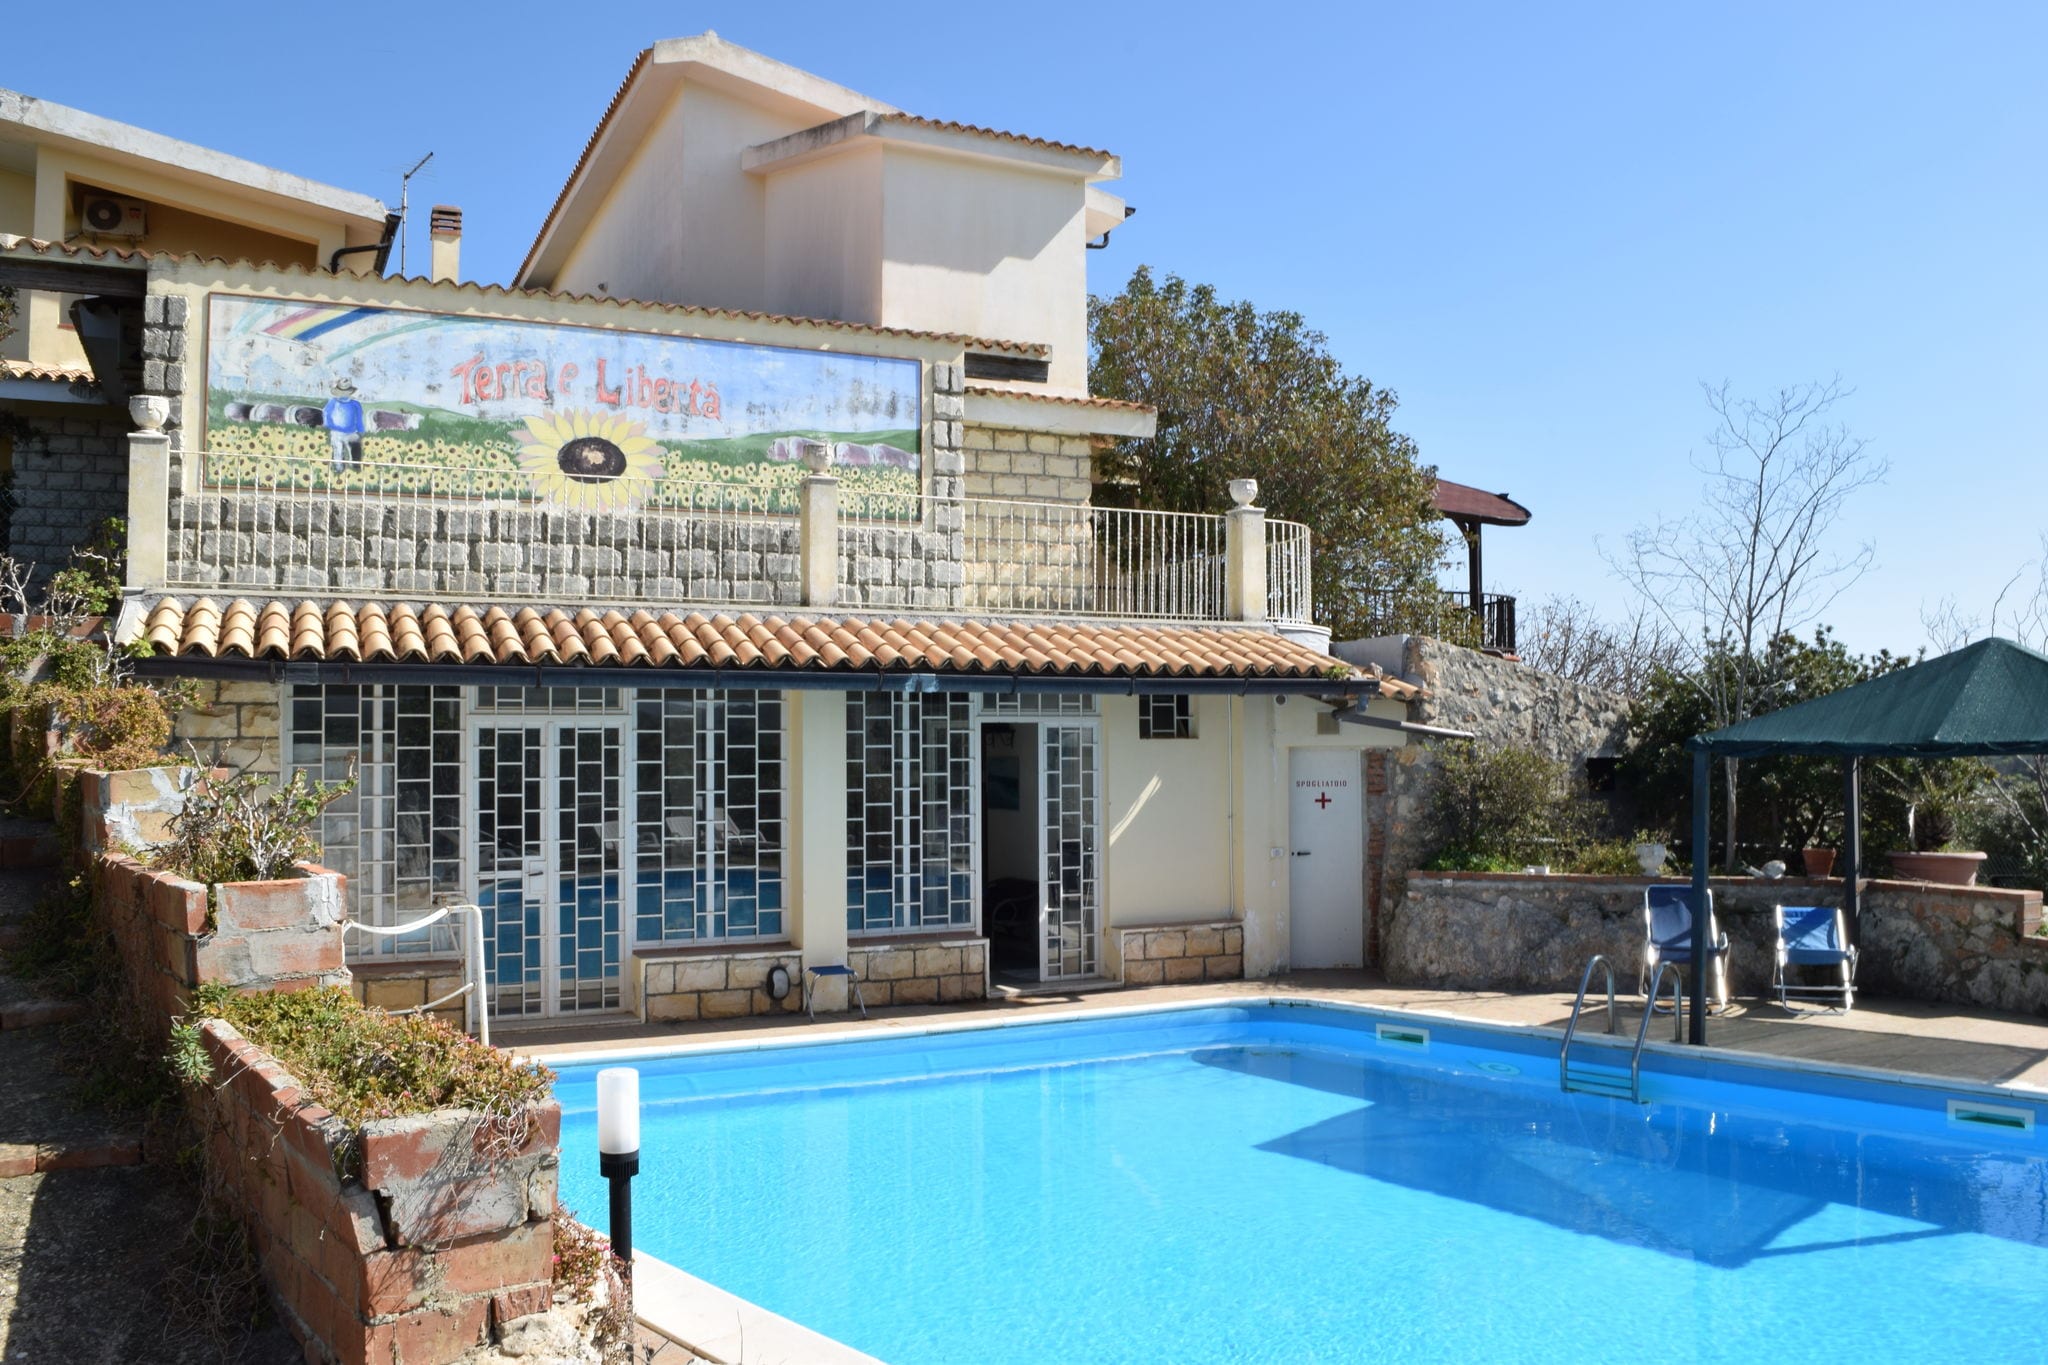 Gemütliche Villa mit Swimmingpool in Syrakus, Sizilien